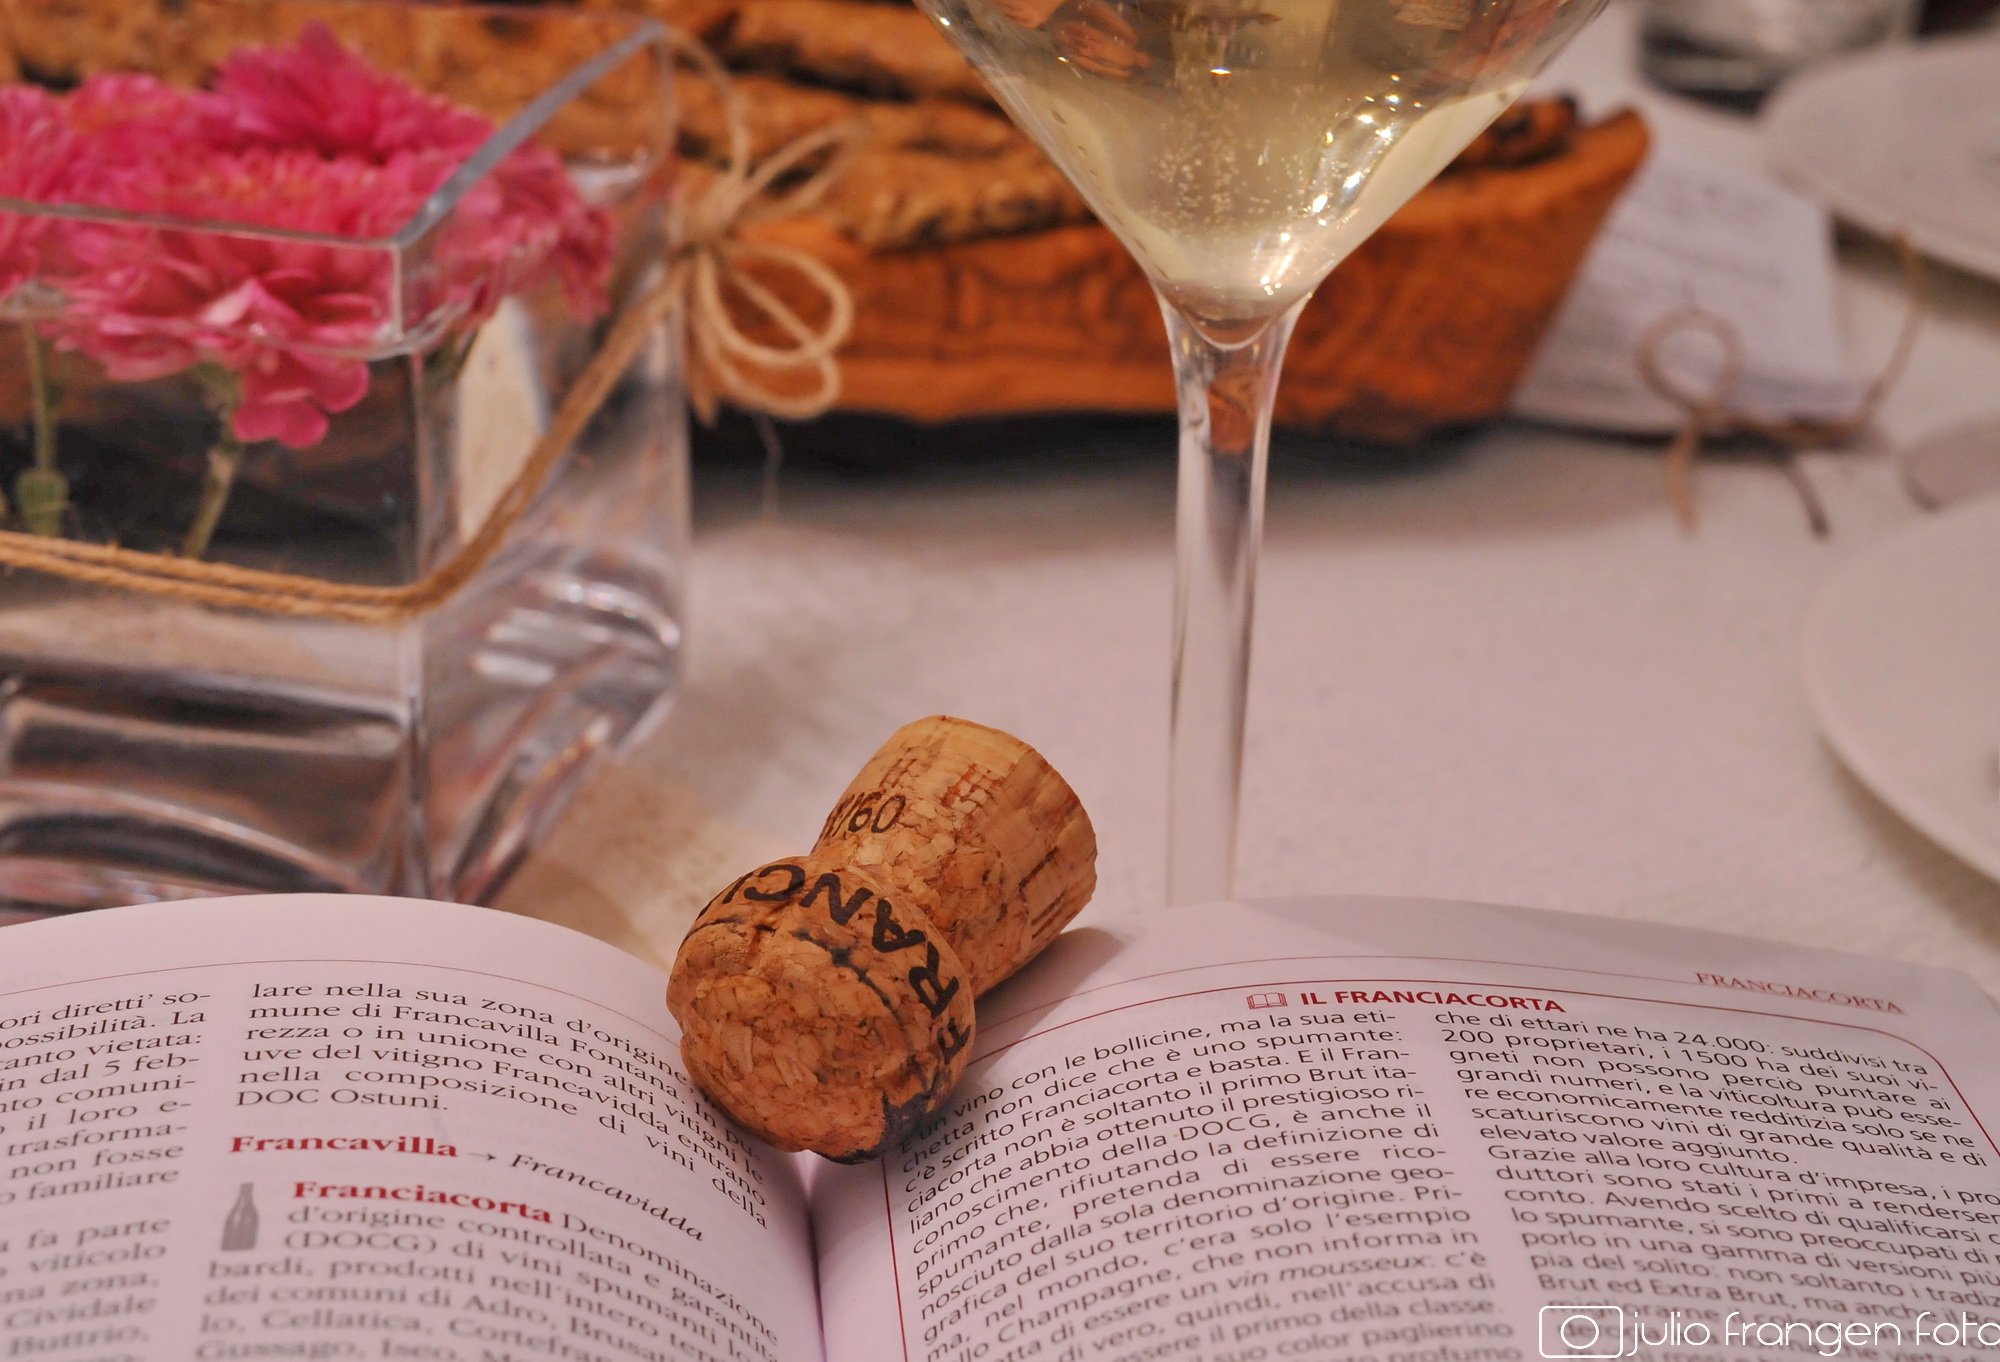 SPARKLING TABLE 2 – Champagne vs Franciacorta